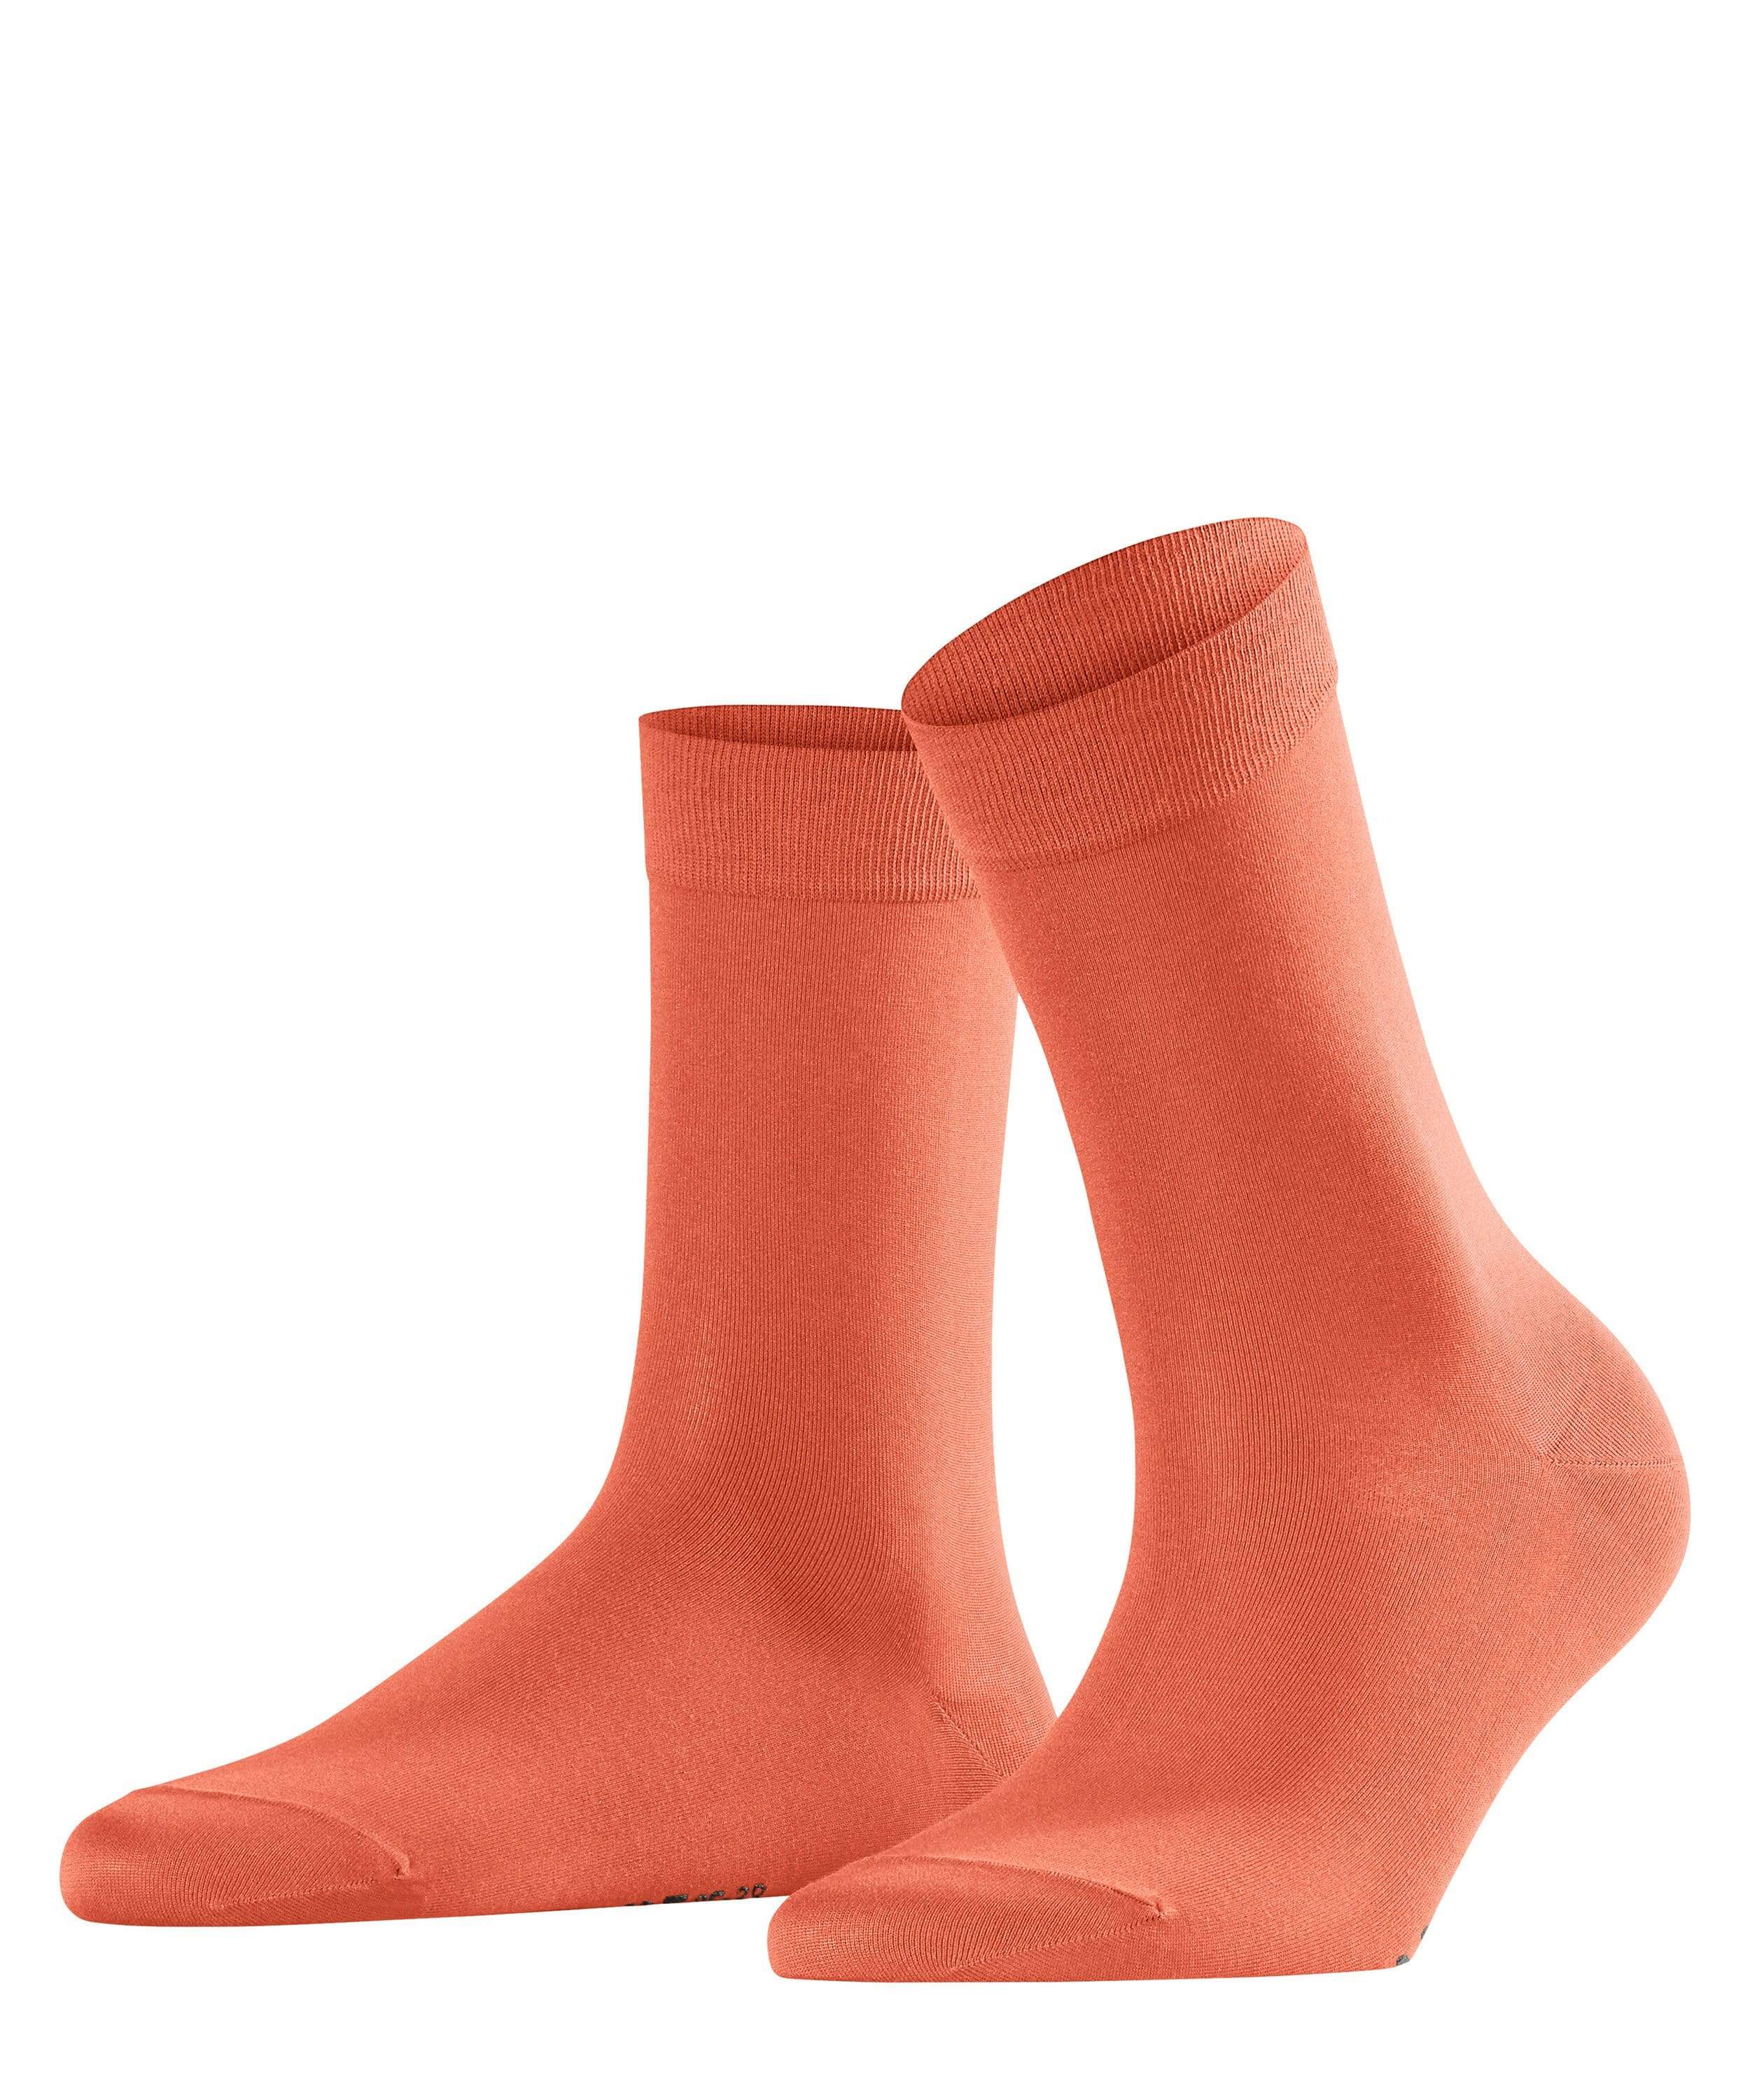 Versterker verzonden gedragen Damen Socke FALKE Cotton Touch SO – asmus shoes & beautiful things